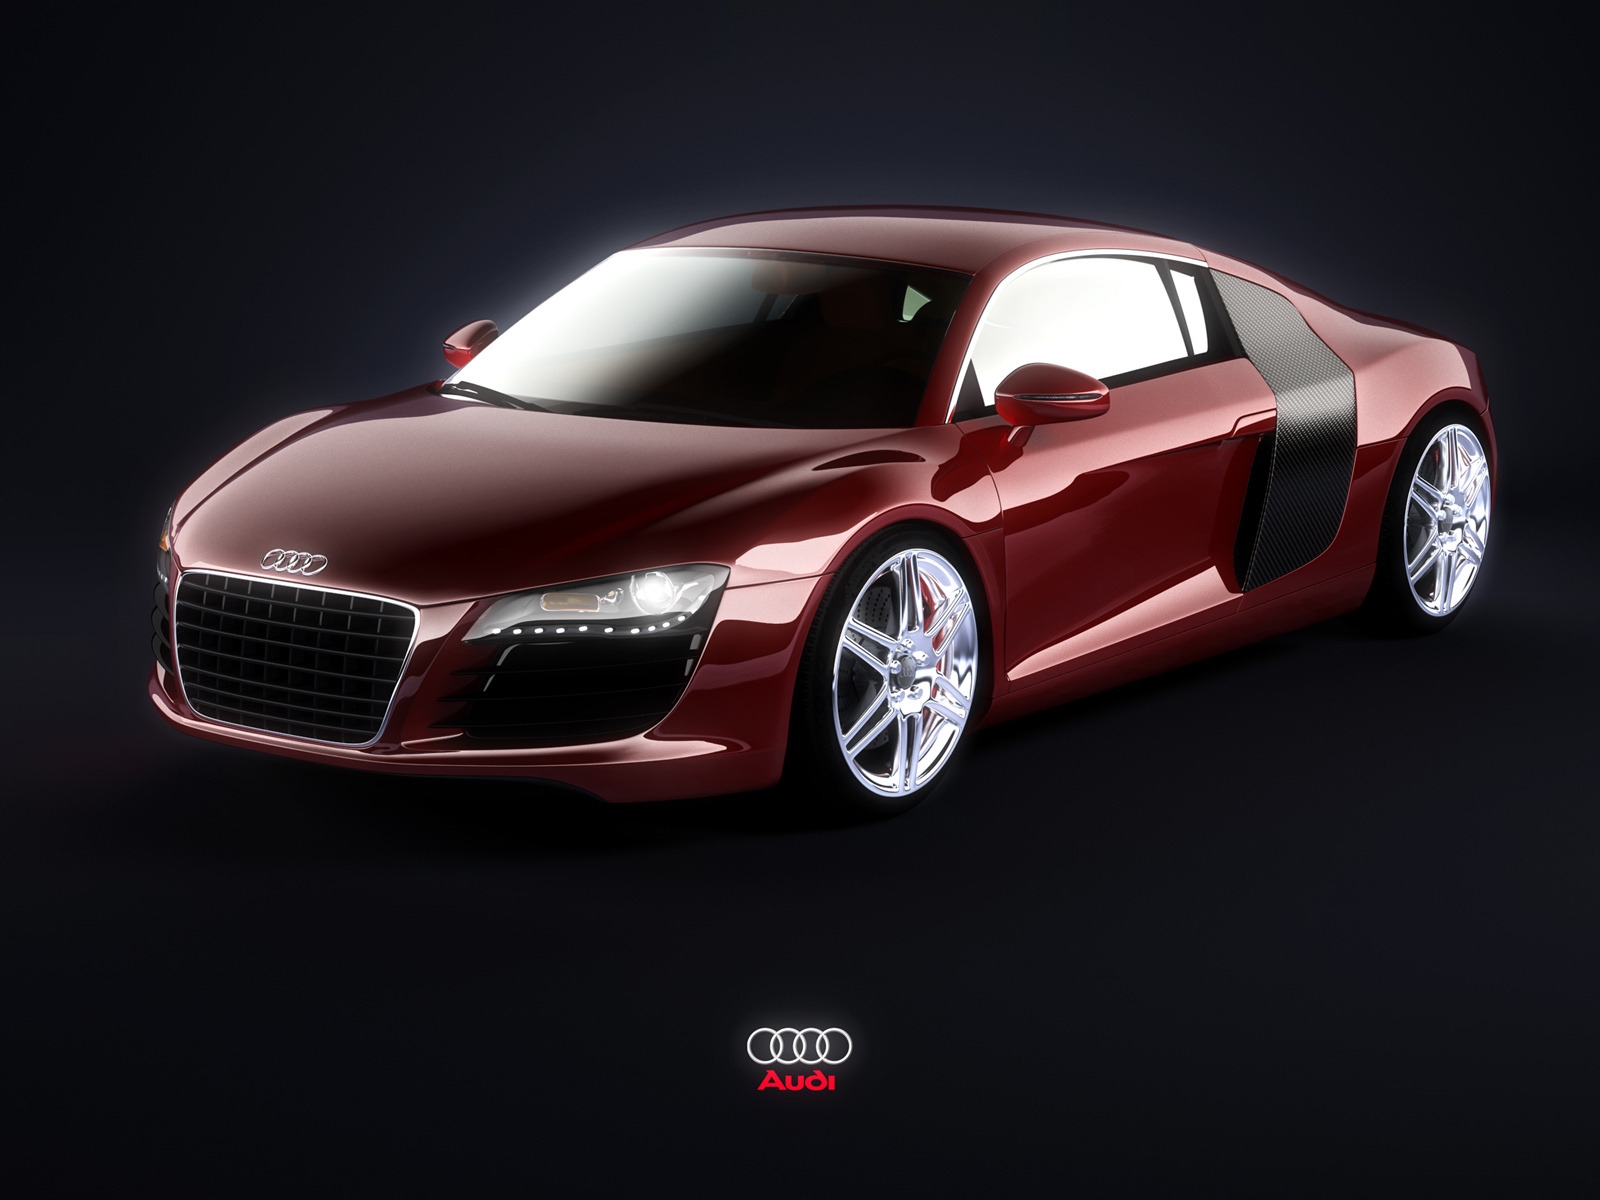 Audi R8 Burgundy for 1600 x 1200 resolution